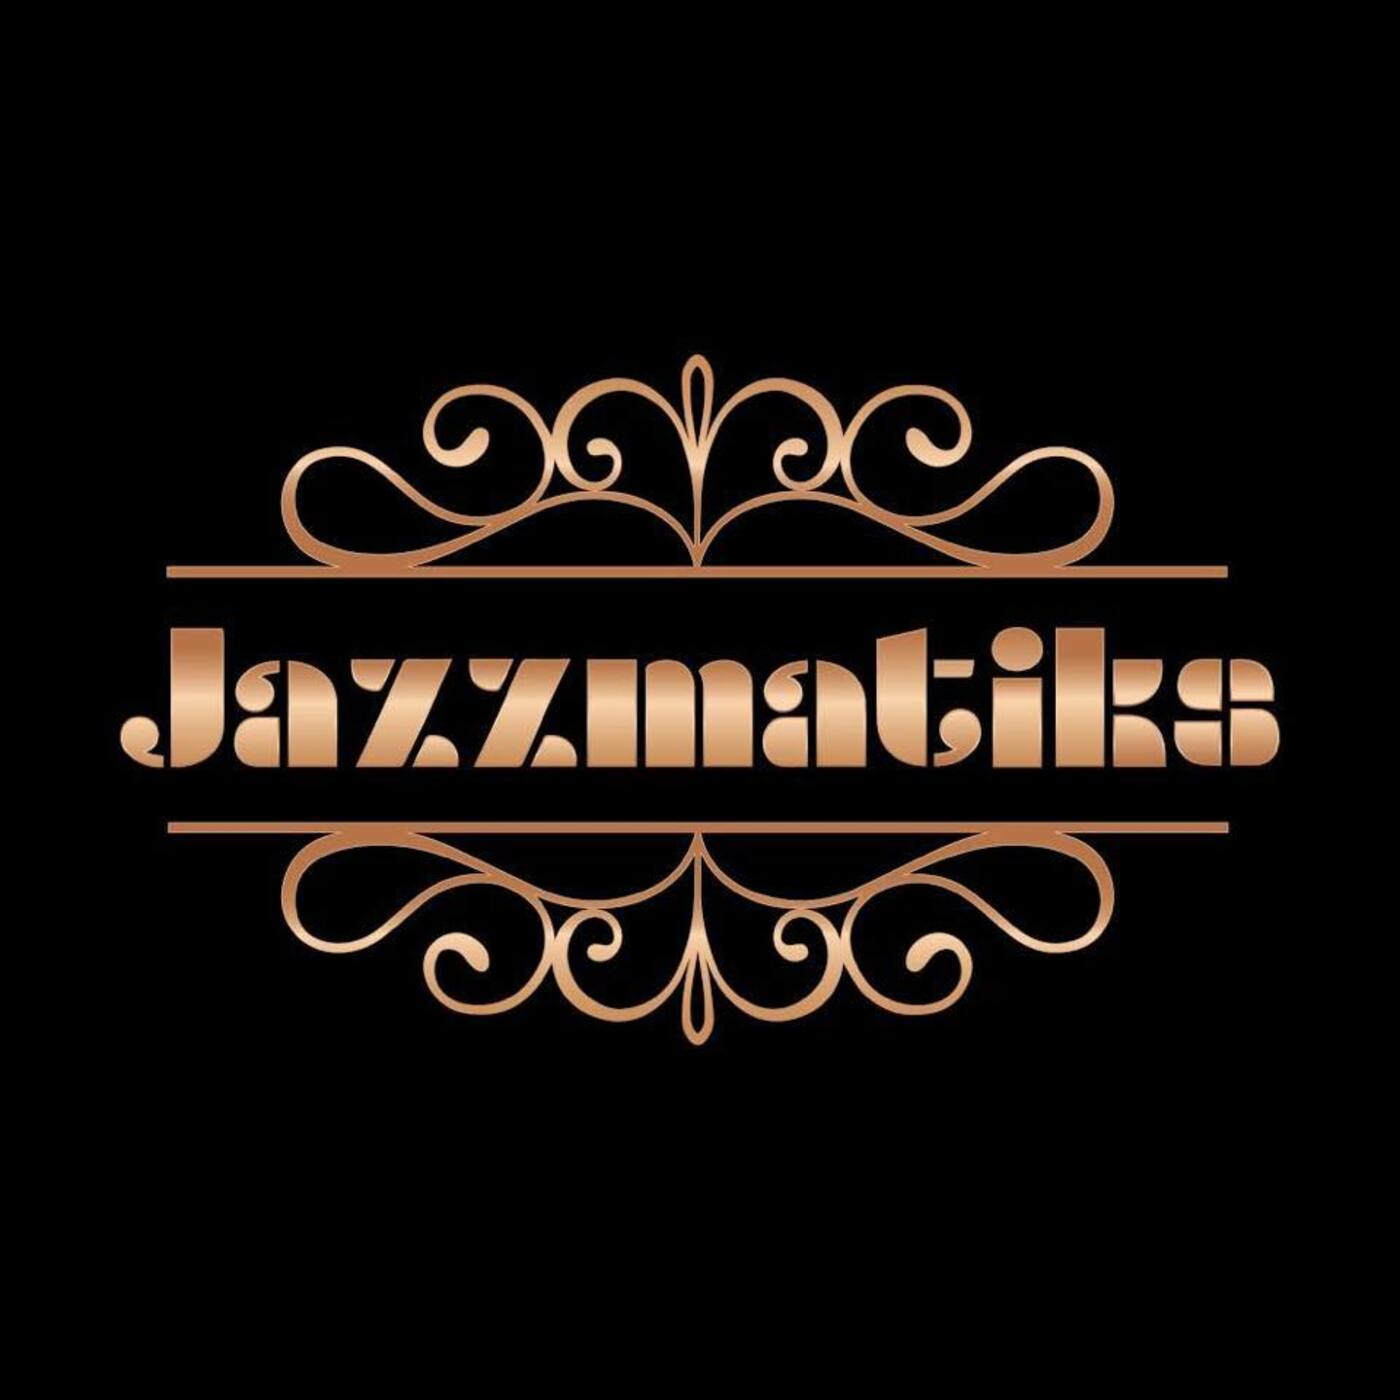 Jazzmatiks | musica en valencià